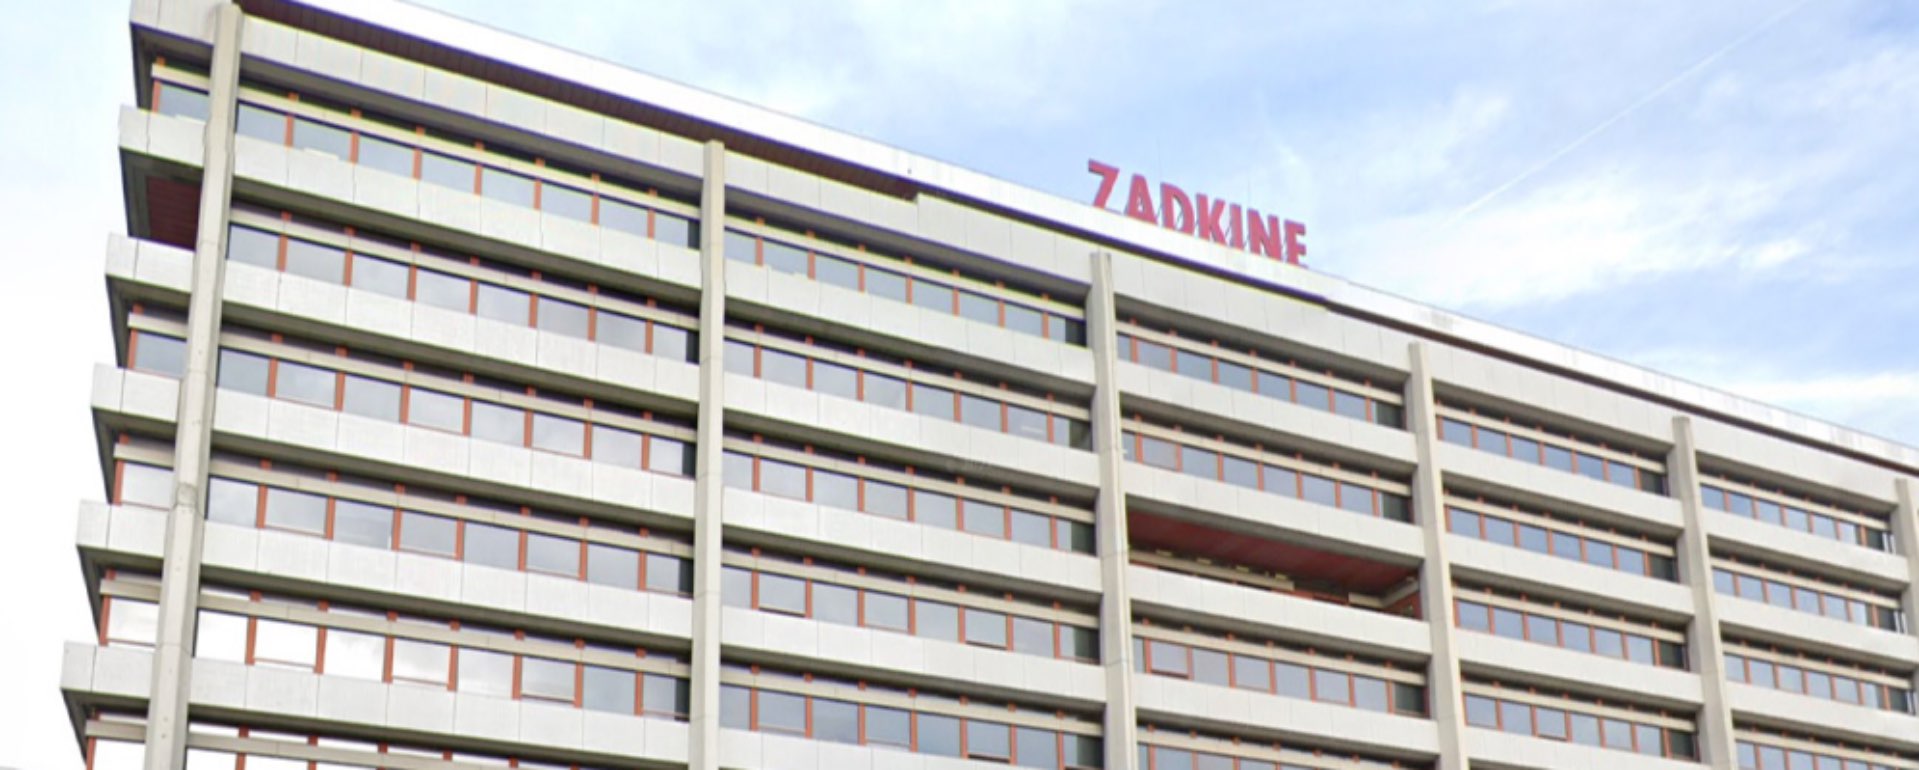 Zadkine College